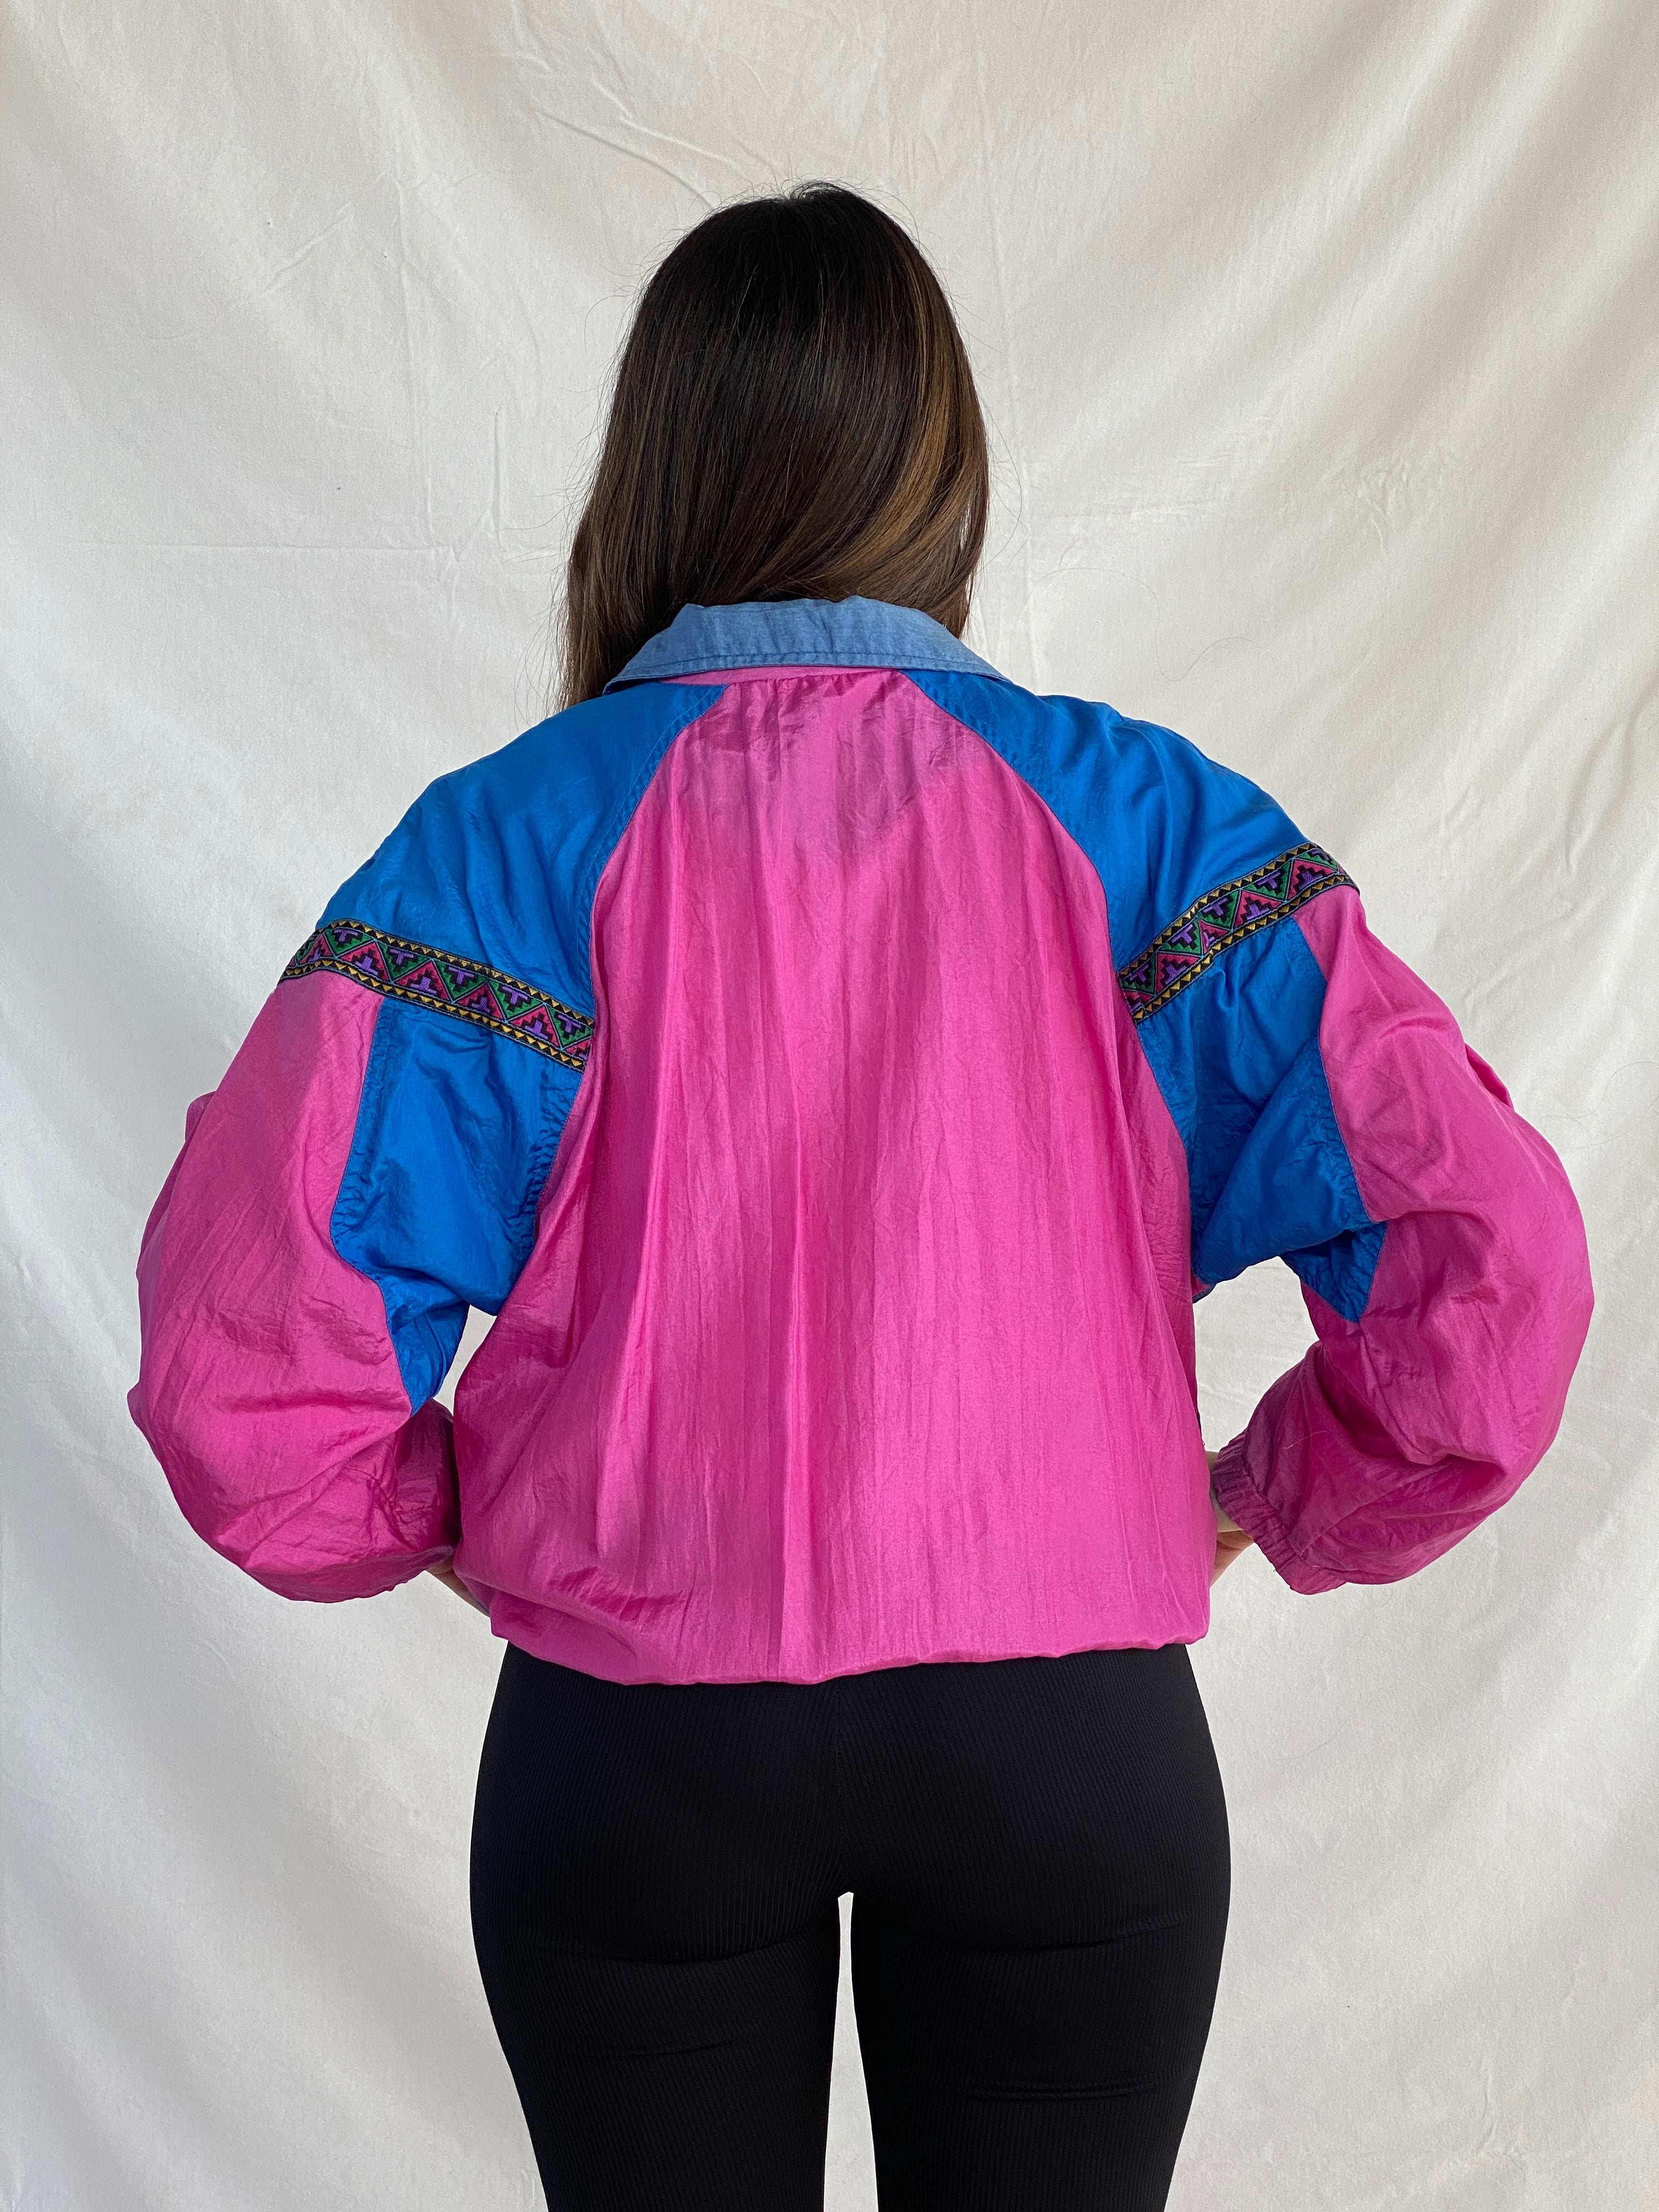 Vintage 80s/90s Giacca Sport Windbreaker Jacket